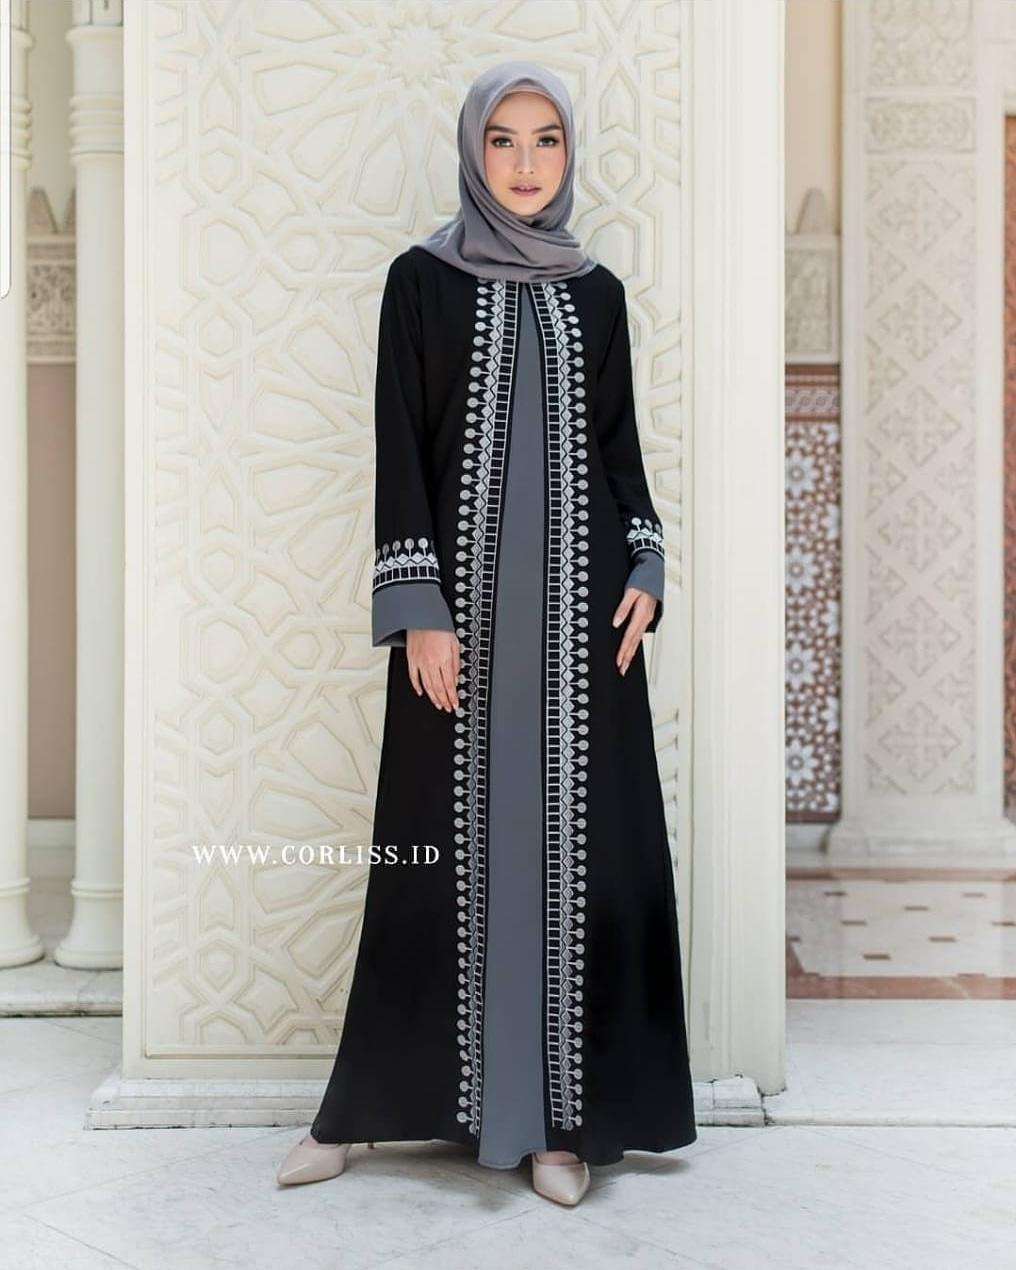 Baju Muslim Modern DUBAI ABAYA DRESS Bahan MOSSCRAPE MIX FULL BORDIR Gamis Wanita Murah Gamis Wanita Remaja Gamis Wanita Modern 2020 Kekinian